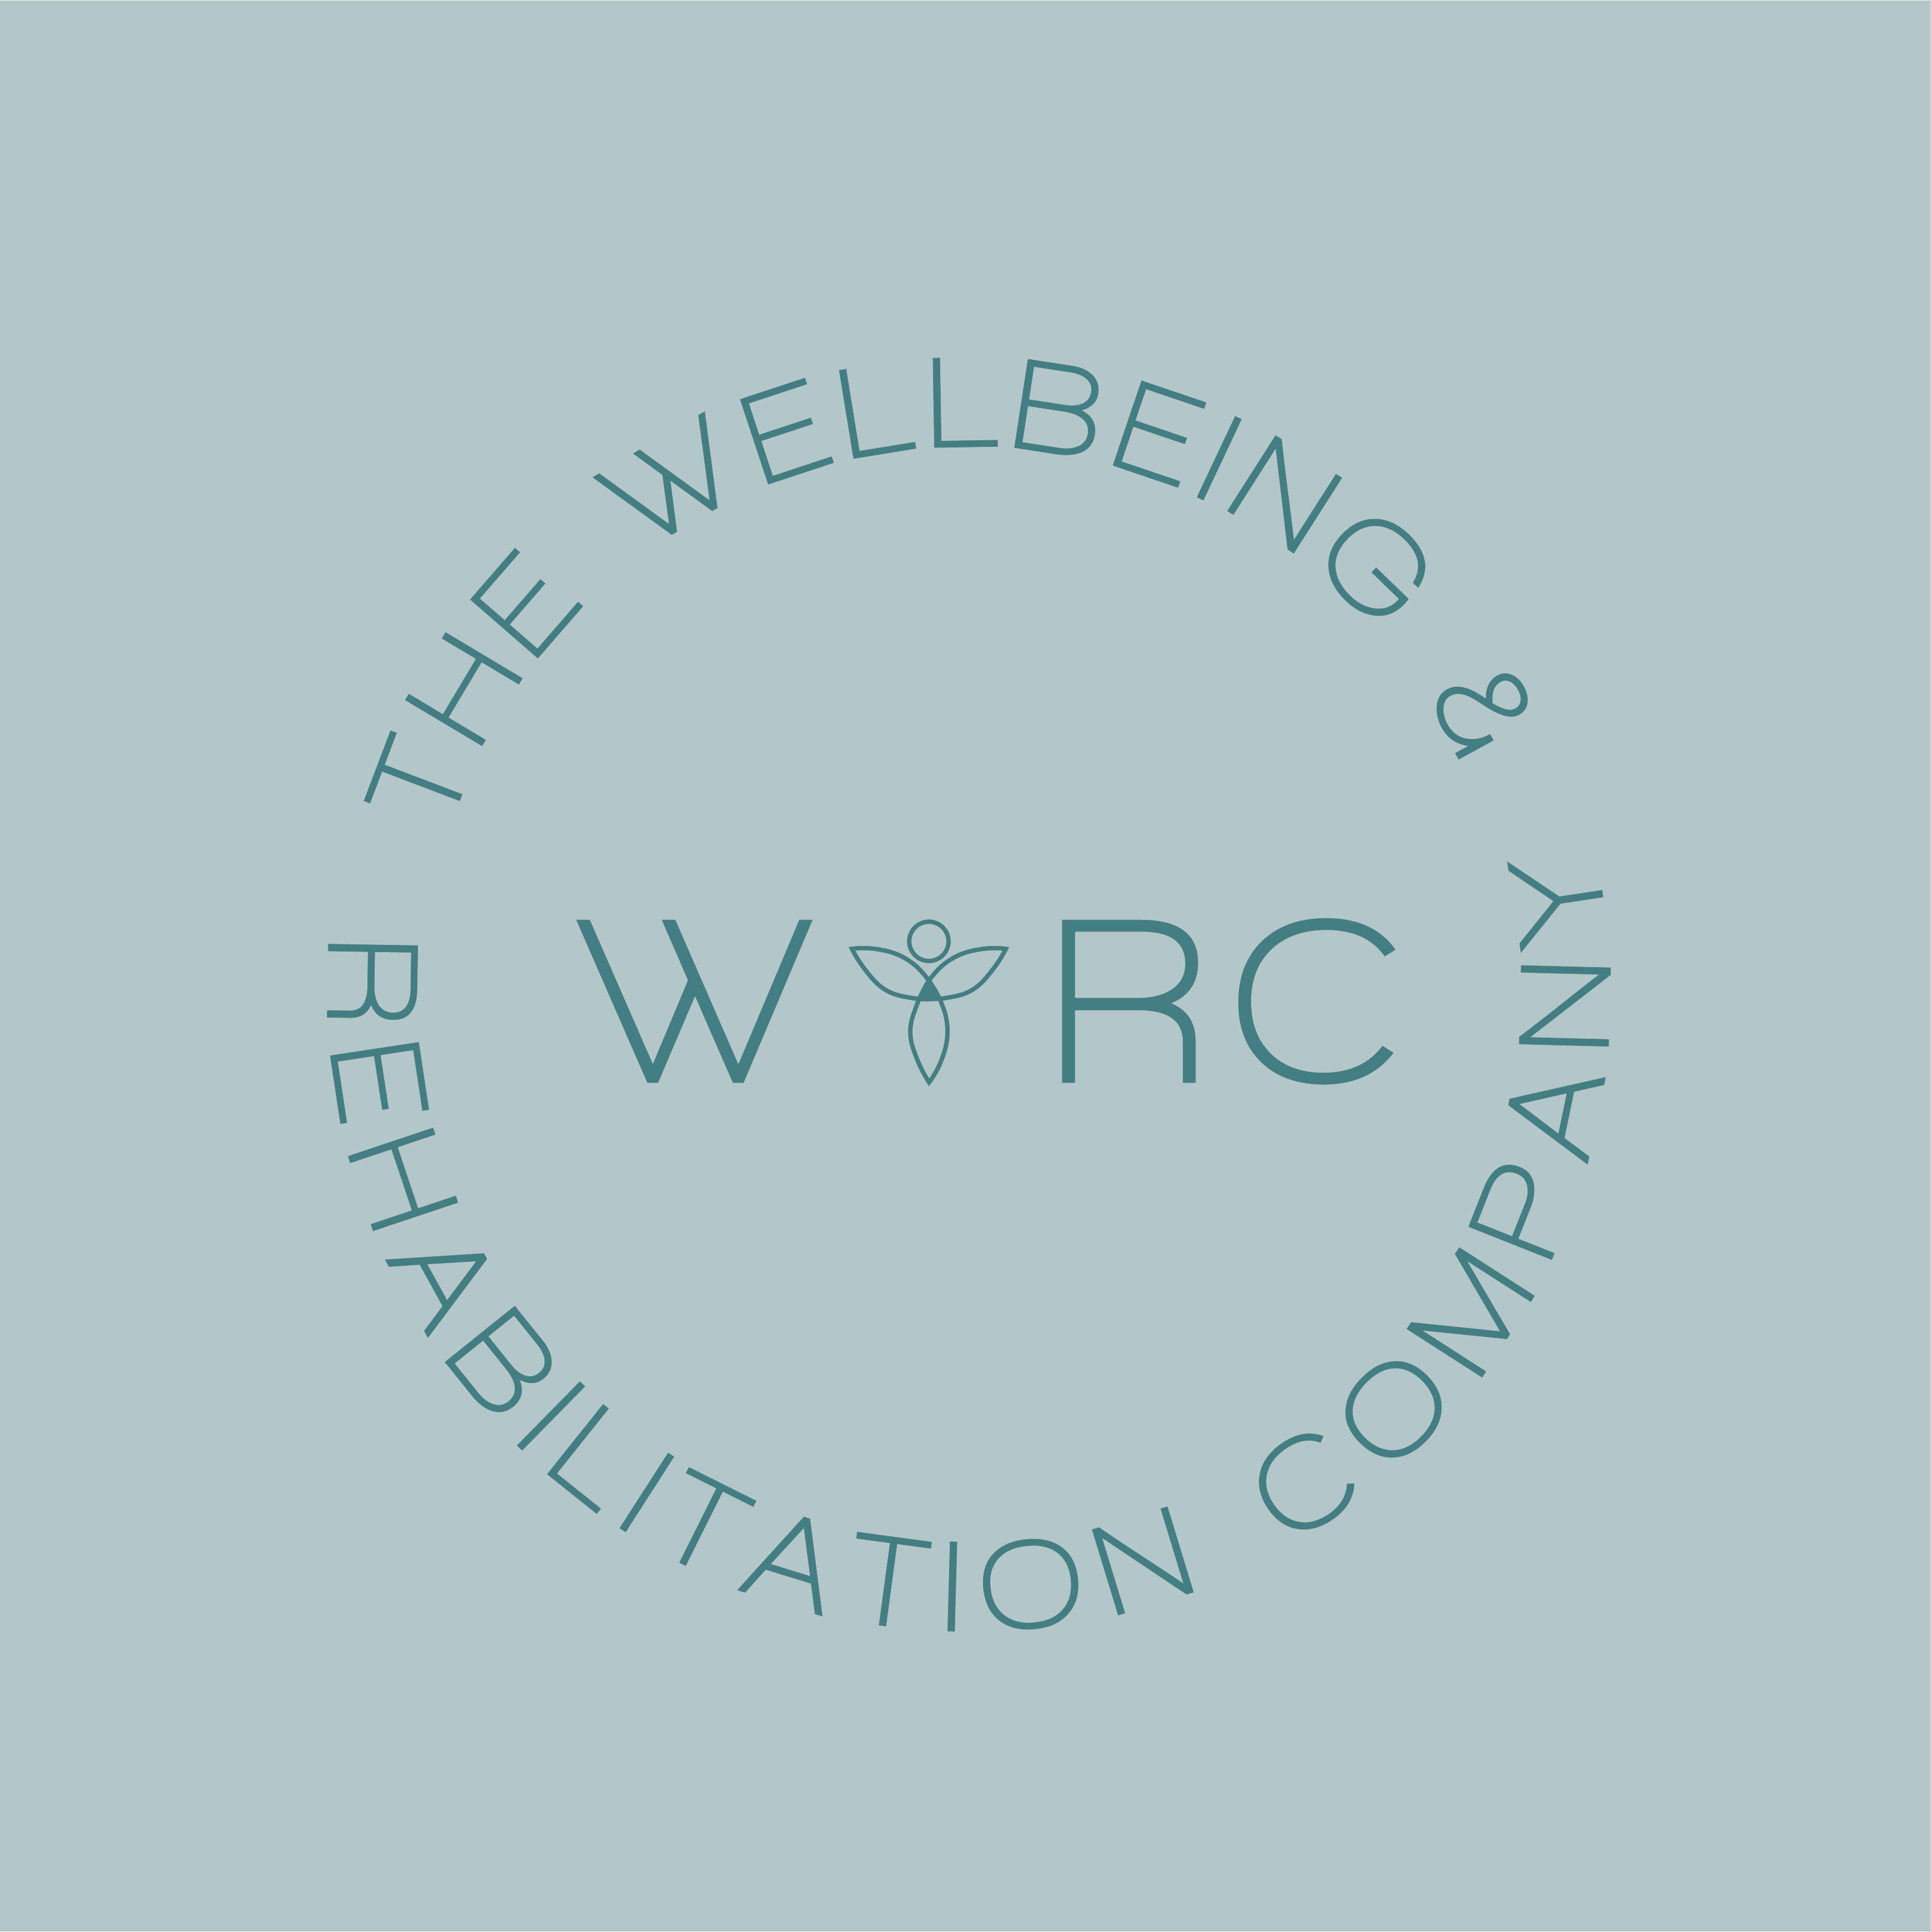 Wellbeing & Rehab Co